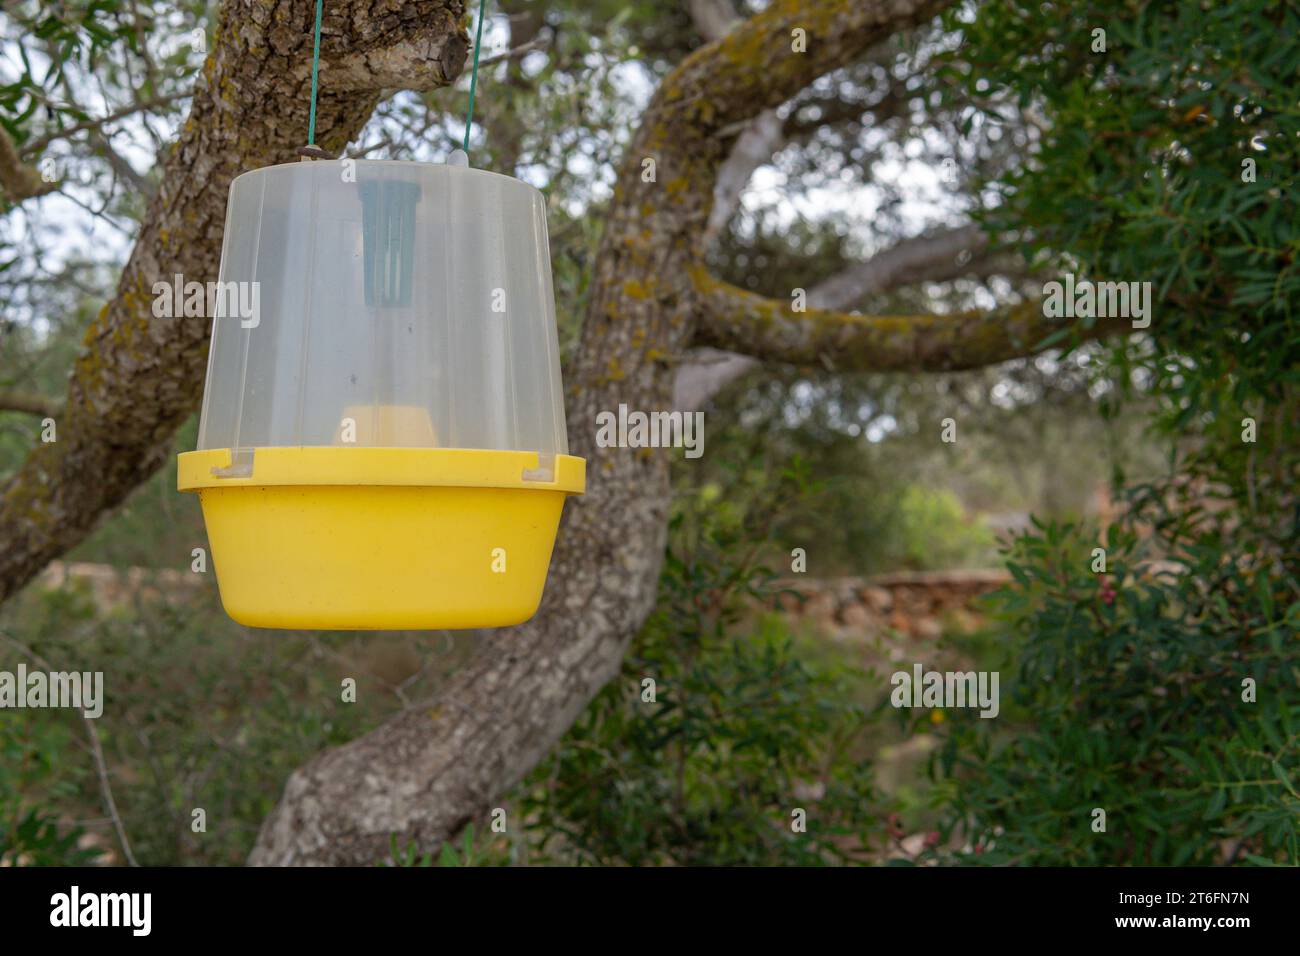 Pheromone-based tree pest control system. Island of Mallorca, Spain Stock Photo